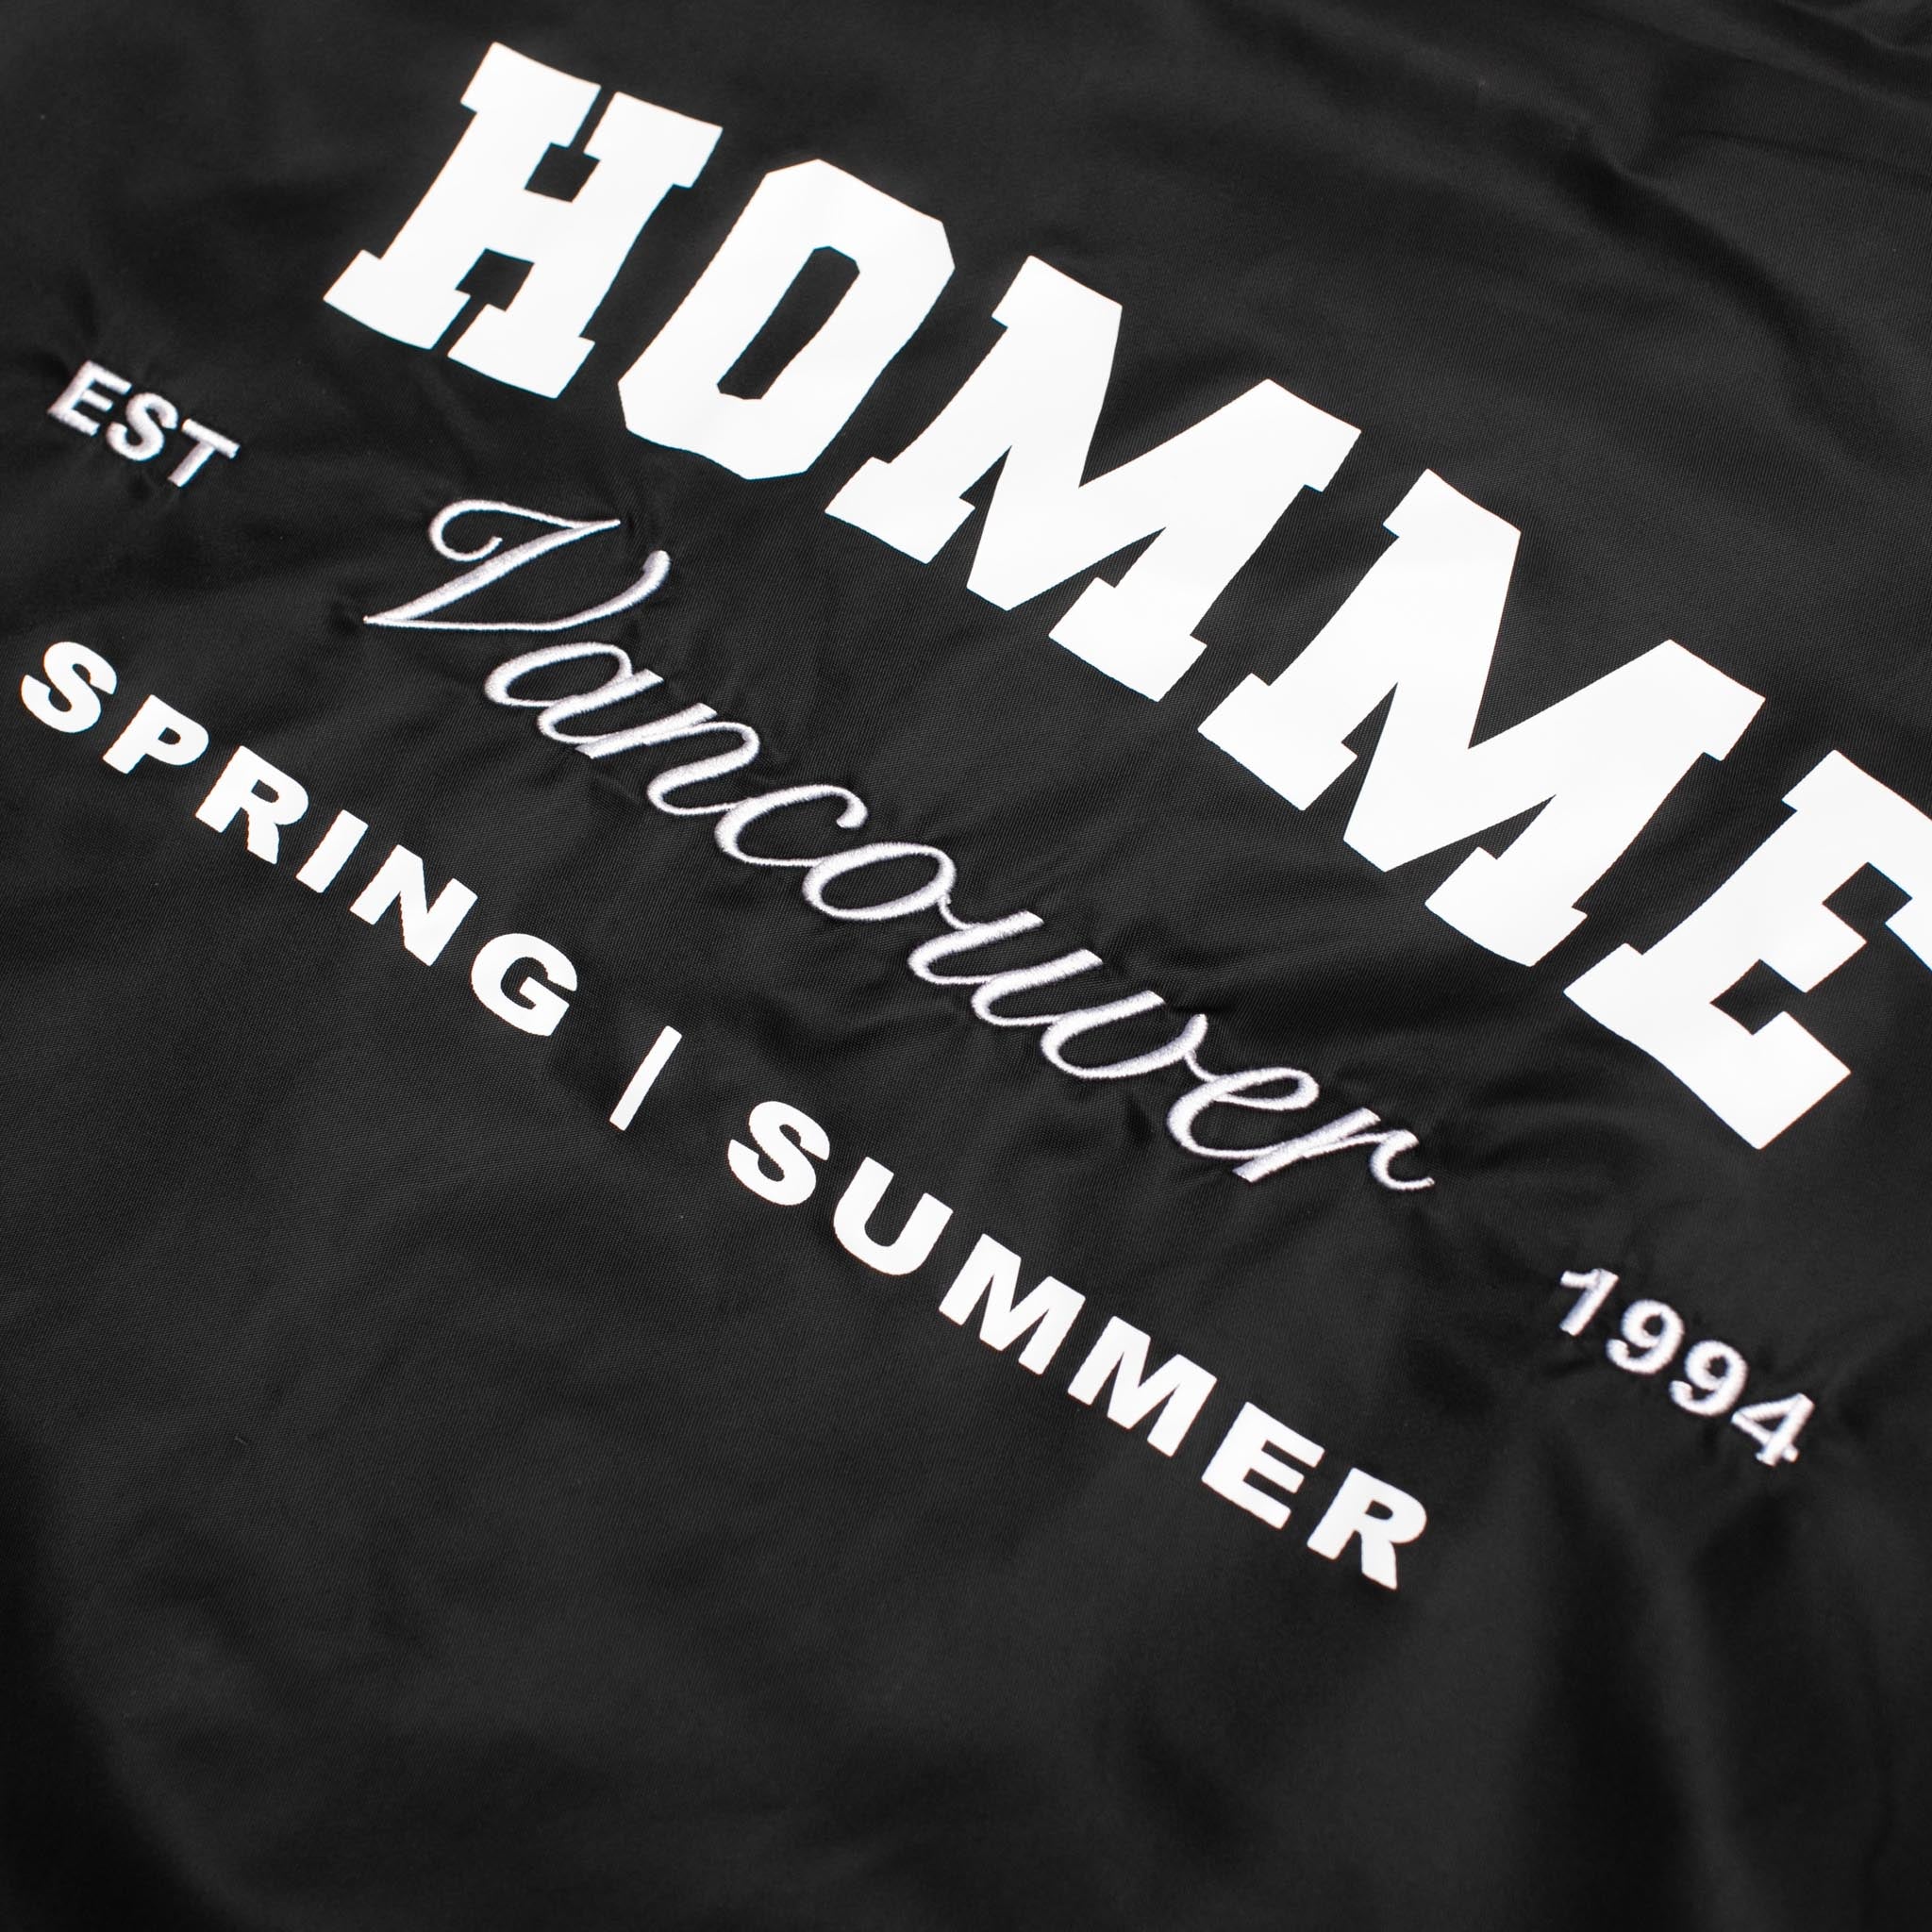 HOMME+ Varsity Jacket Black/White